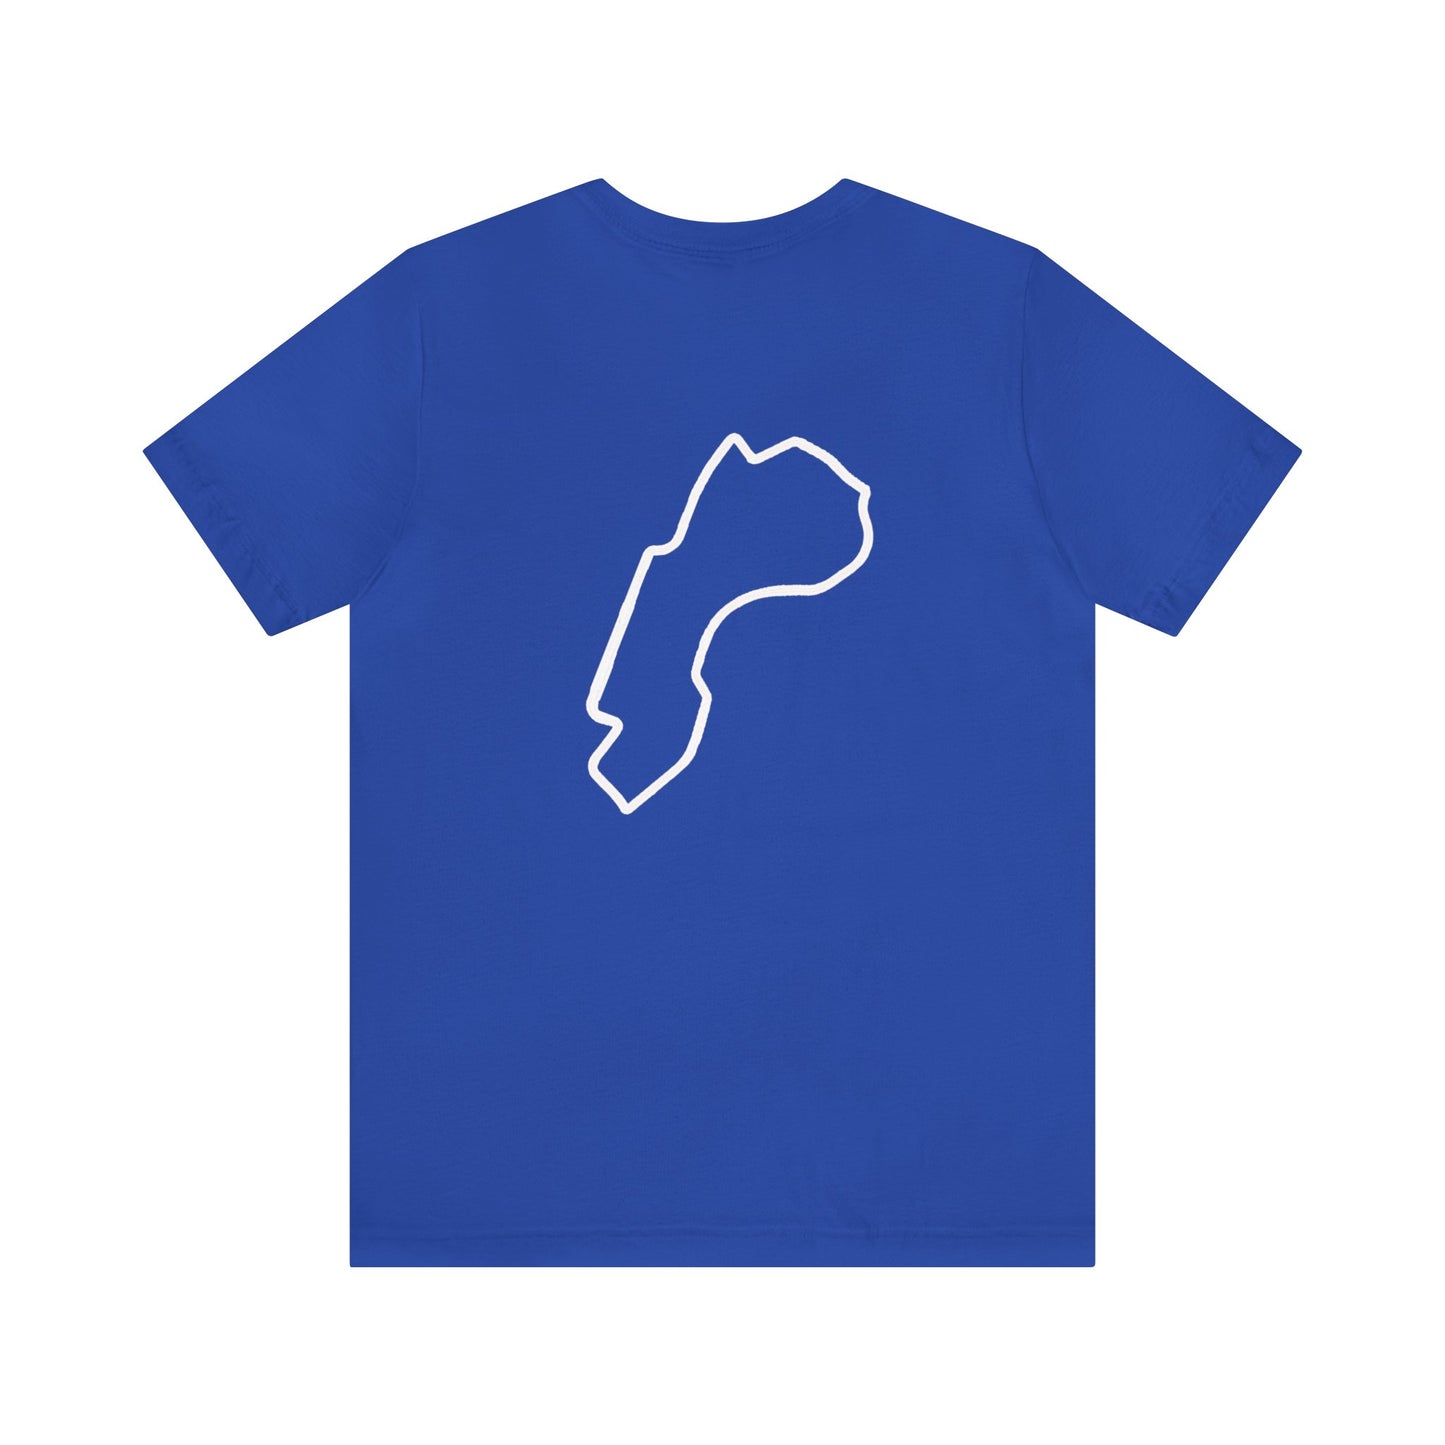 Unisex Australian Grand Prix T-Shirt